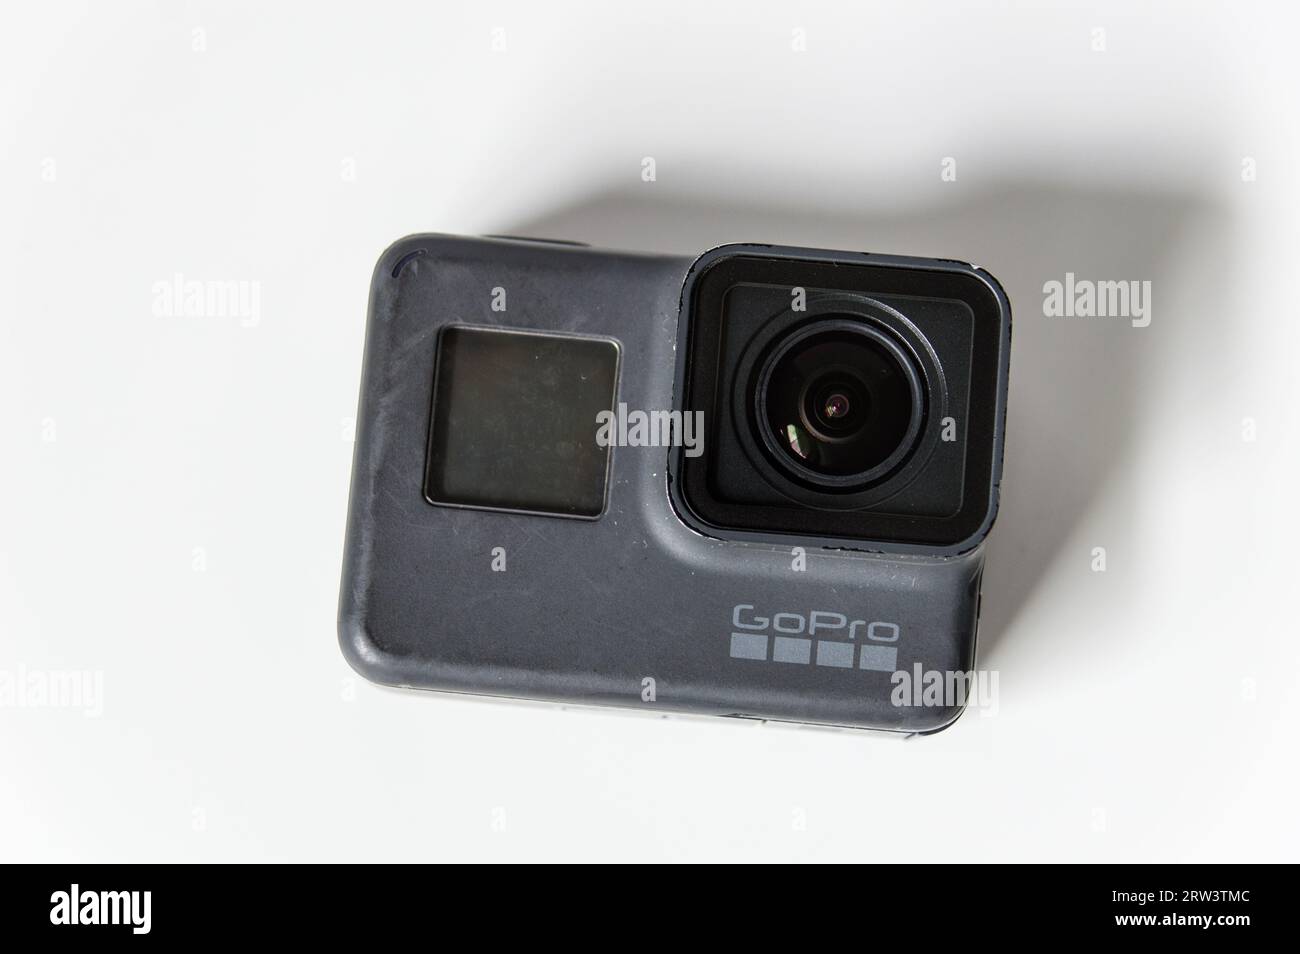 GoPro camera Stock Photo